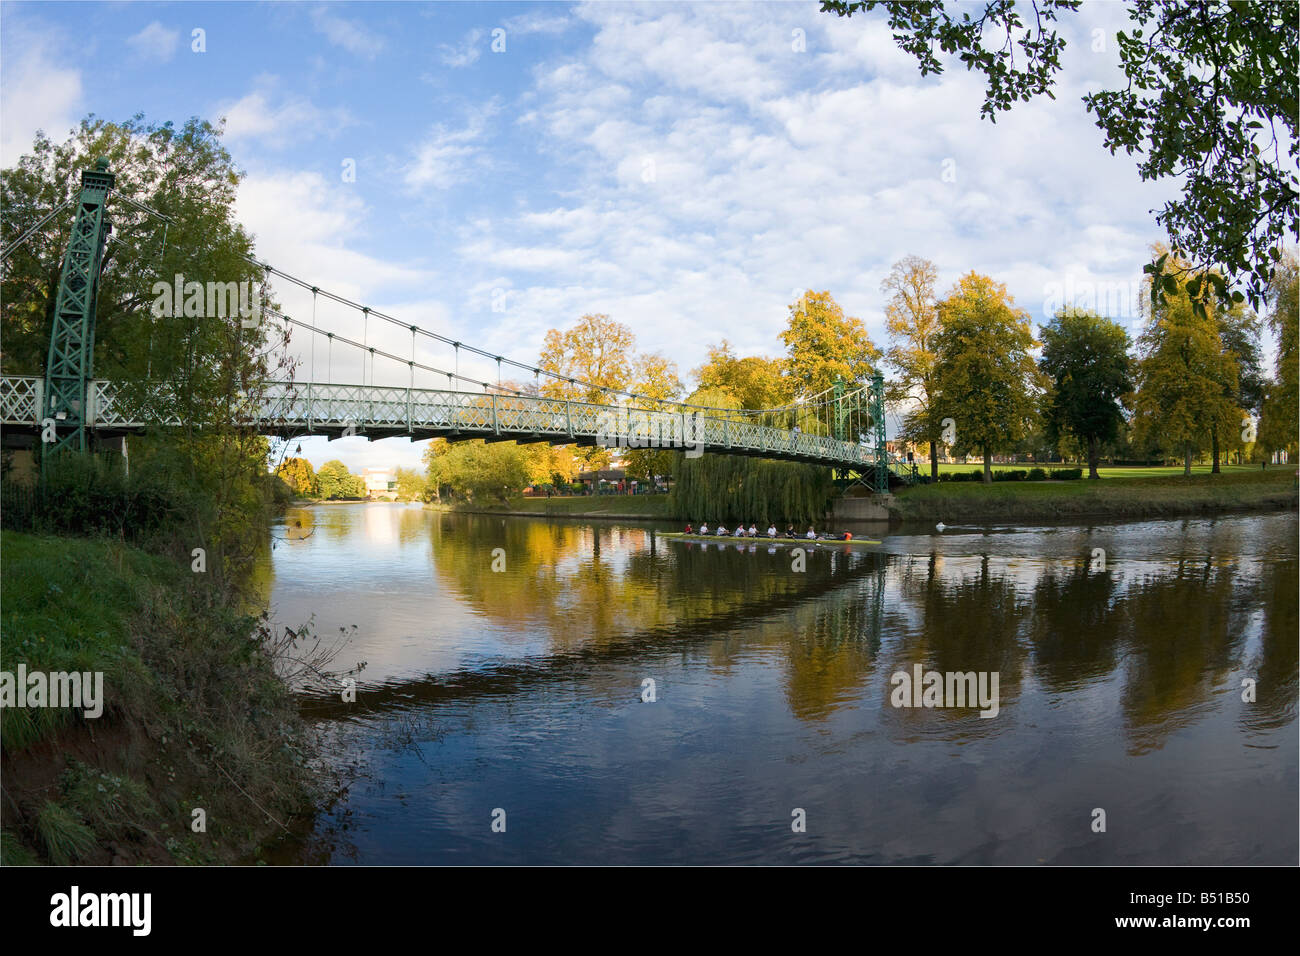 Fußgänger-Hängebrücke über den Fluss Severn in Quarry Park in Shrewsbury Shropshire England UK-Vereinigtes Königreich-GB Stockfoto